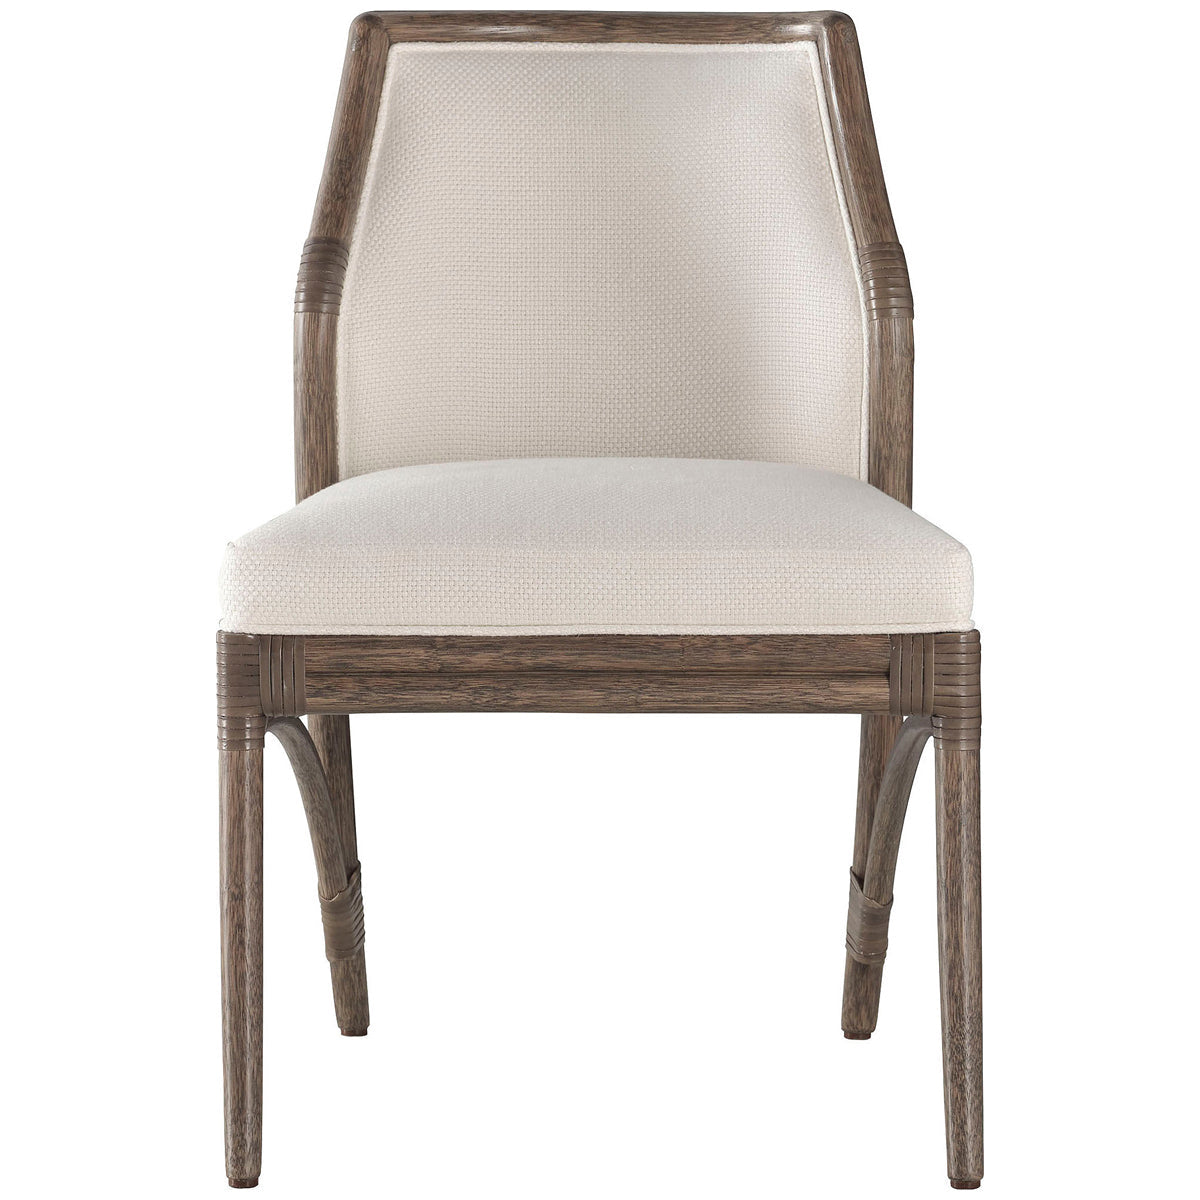 Baker Furniture Lantana Side Chair MCA2340